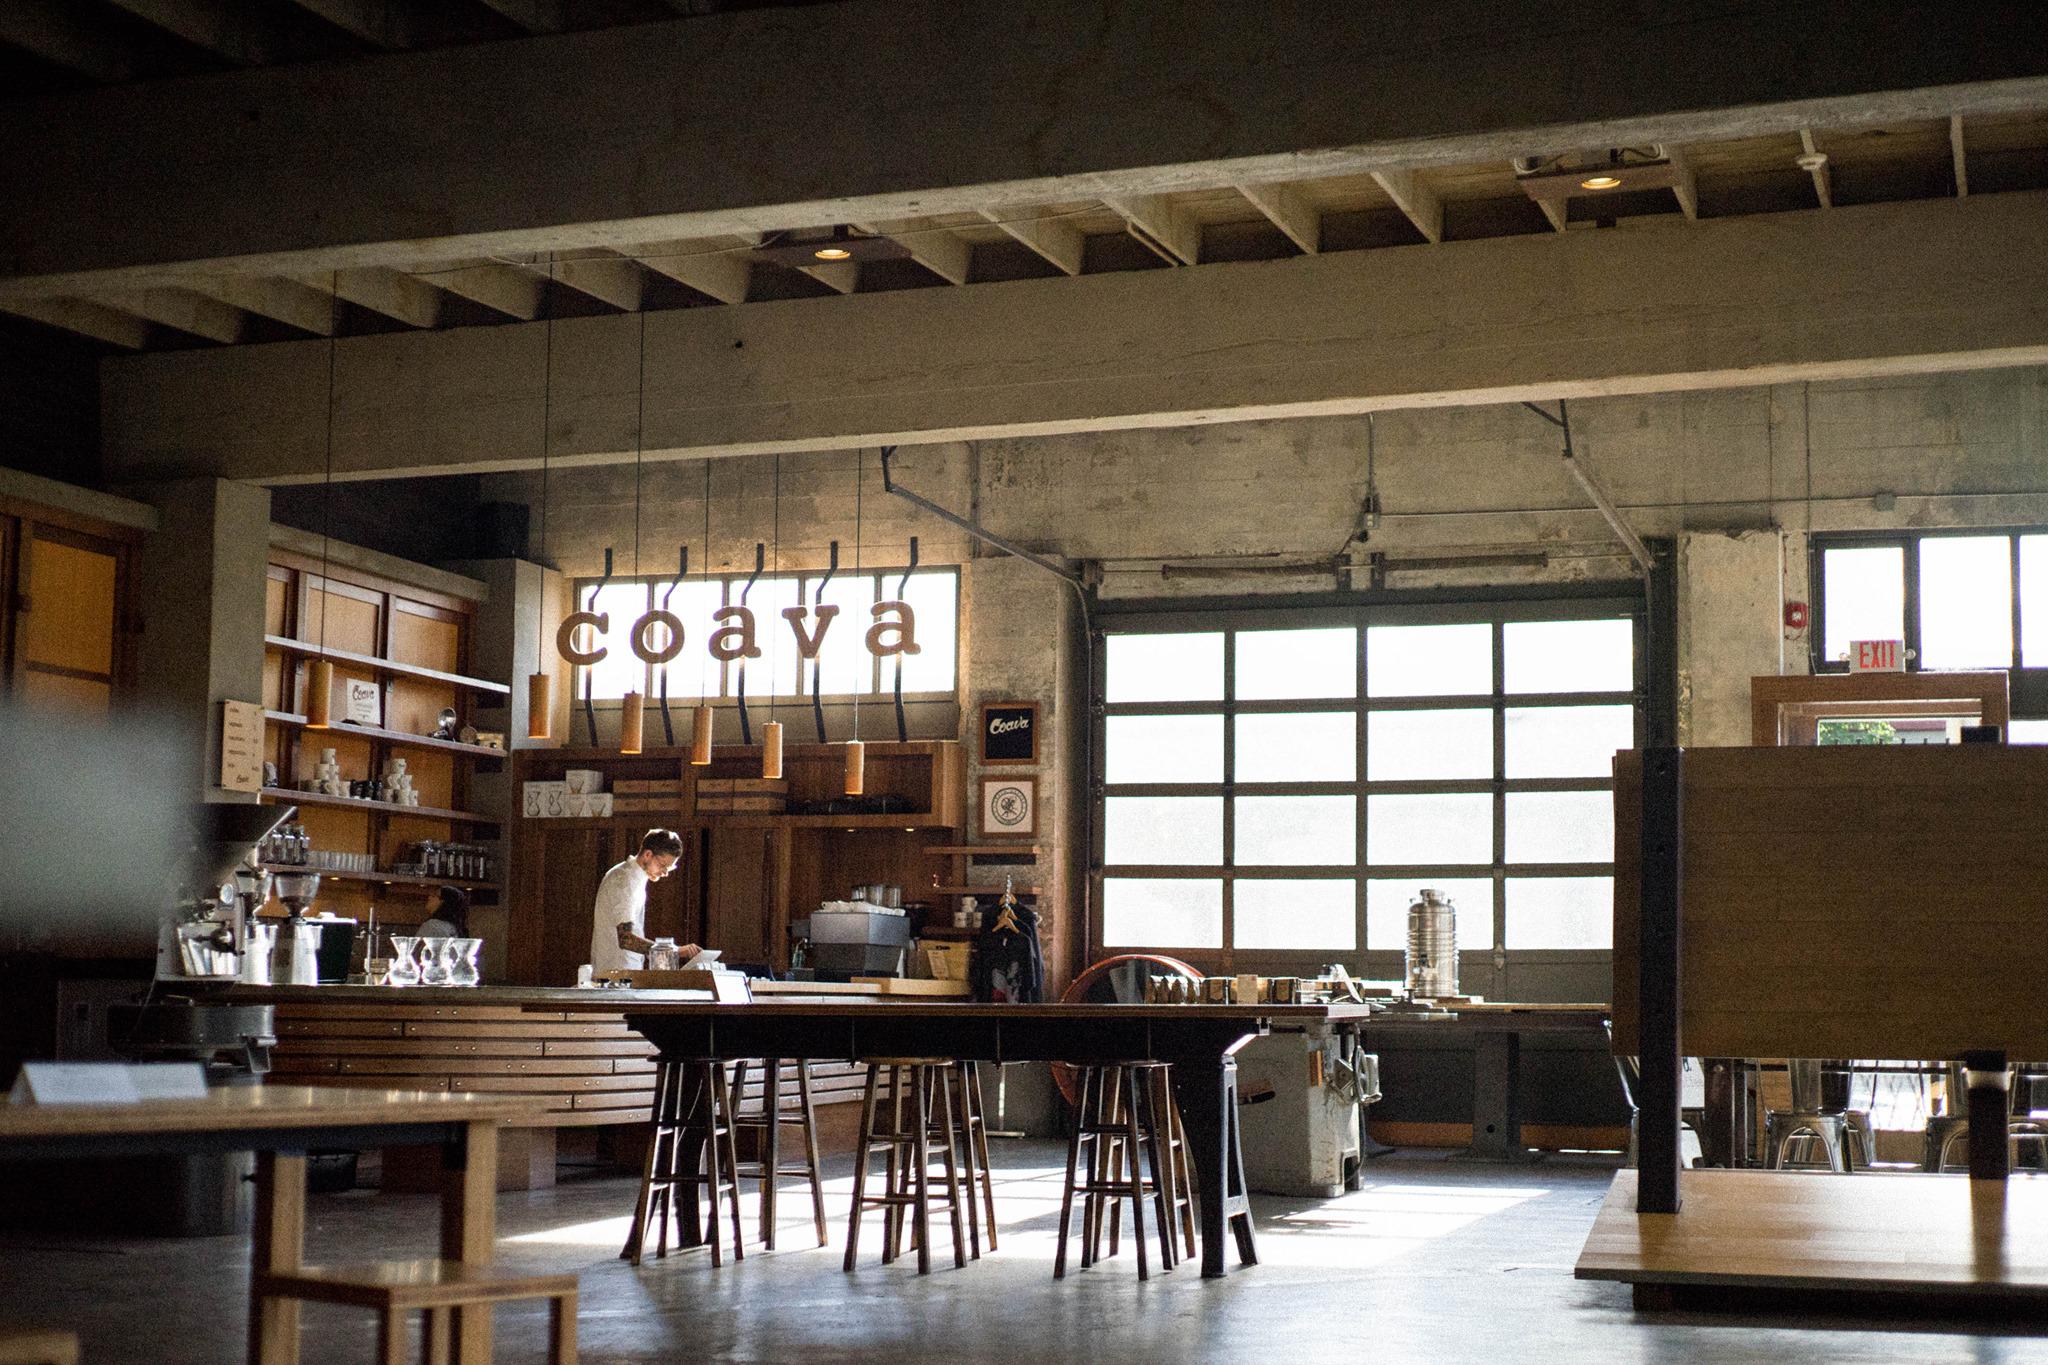 Banner Coava Coffee Roasters